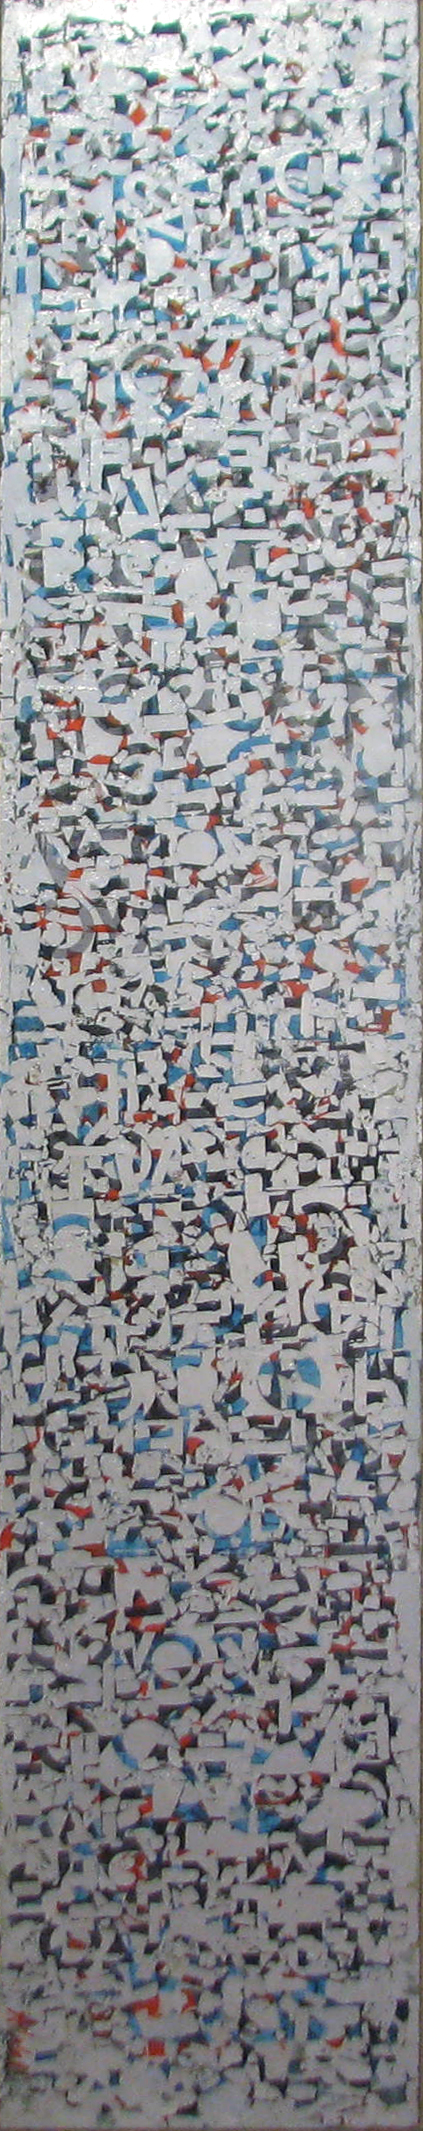 Alphabet Overlay, 1980
mixed media
72 x 14
